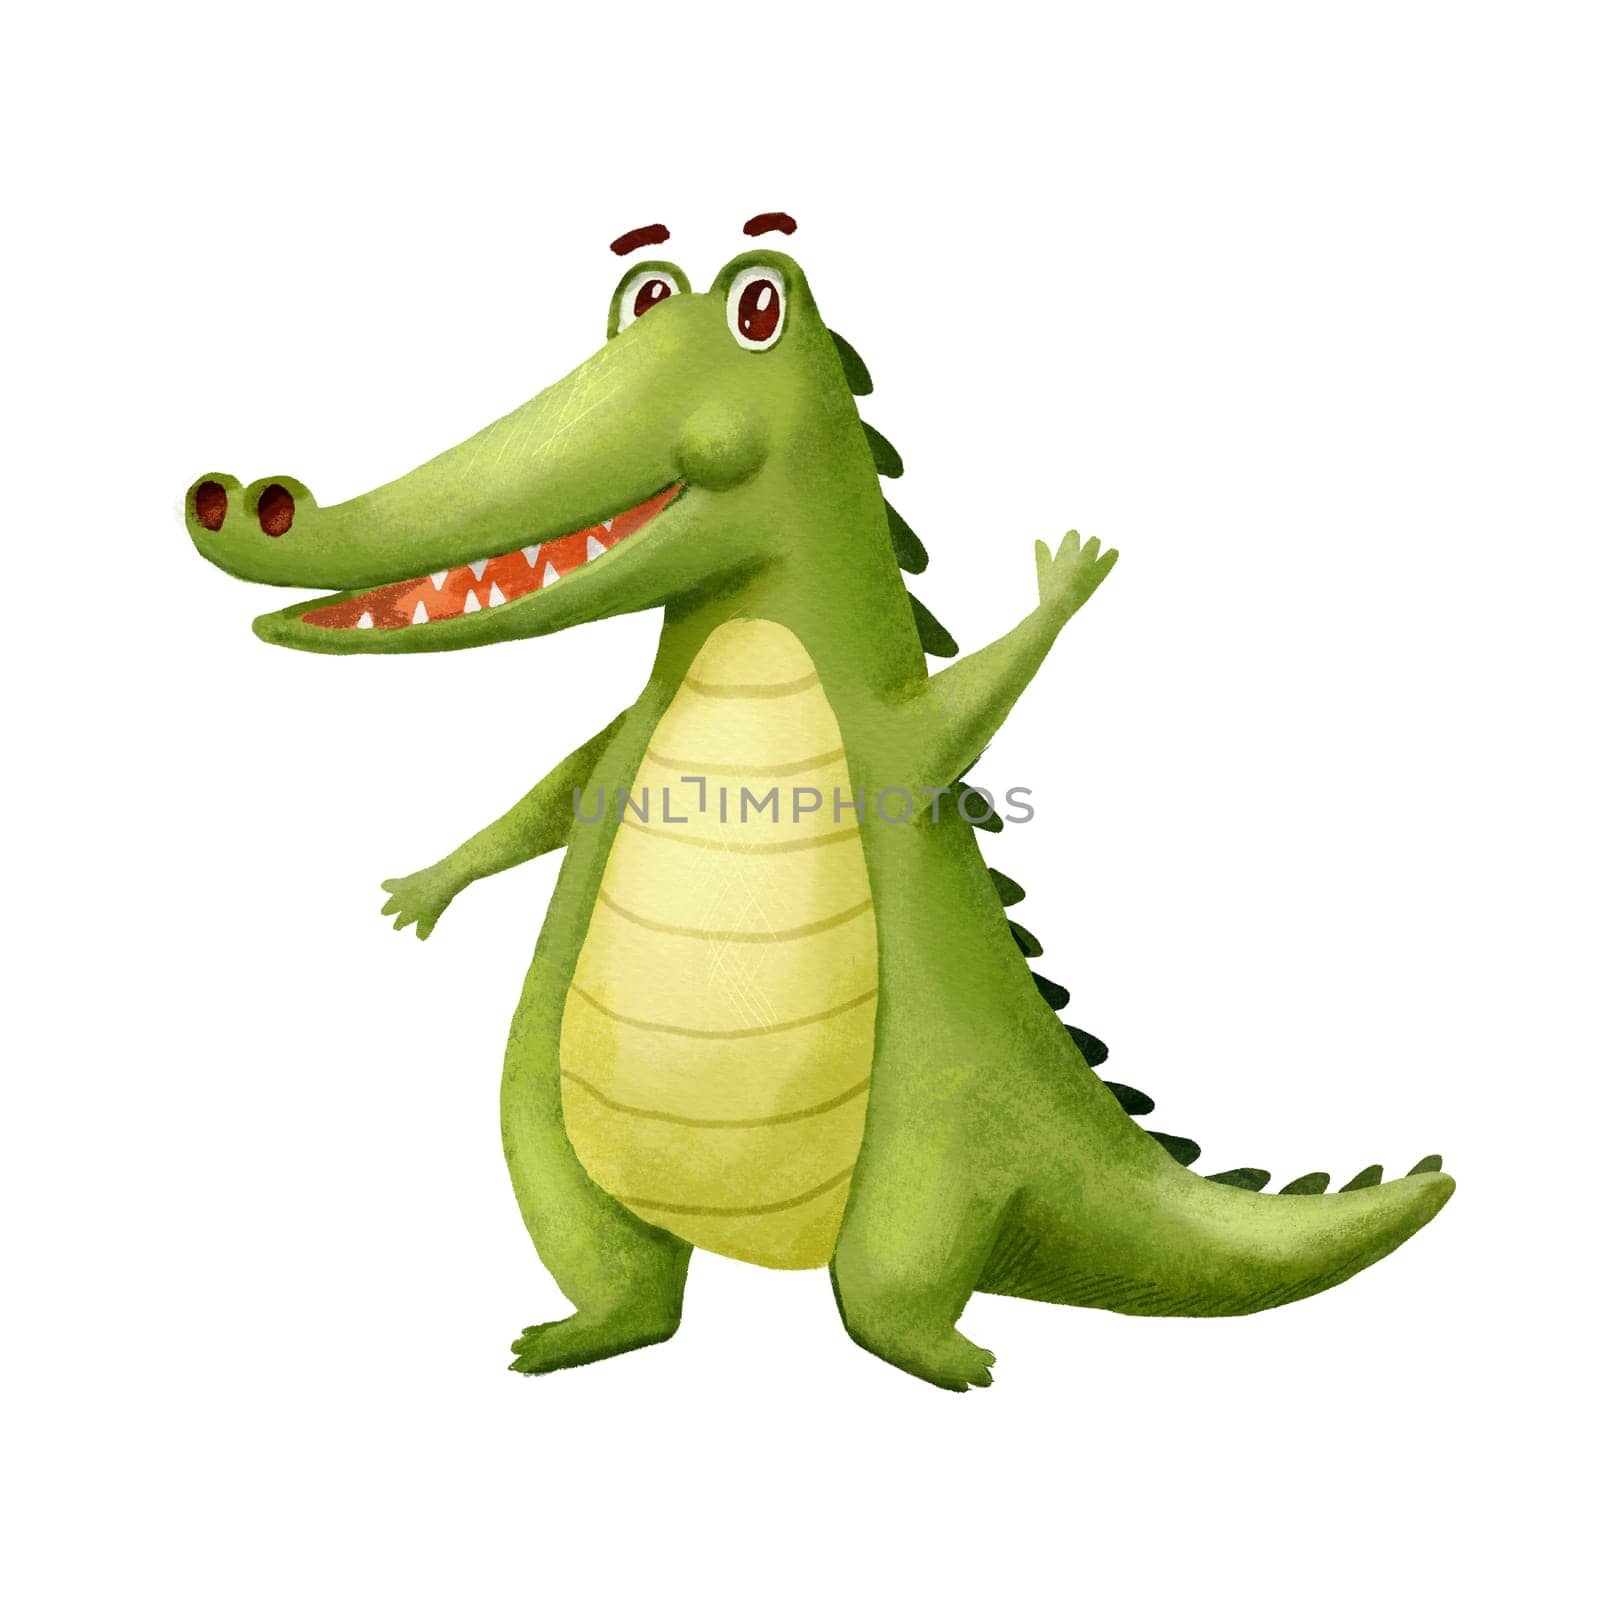 Cute Crocodile waving hand. Funny Alligator isolated on white. Cartoon hand drawn Illustration. Green Animal Character by ElenaPlatova